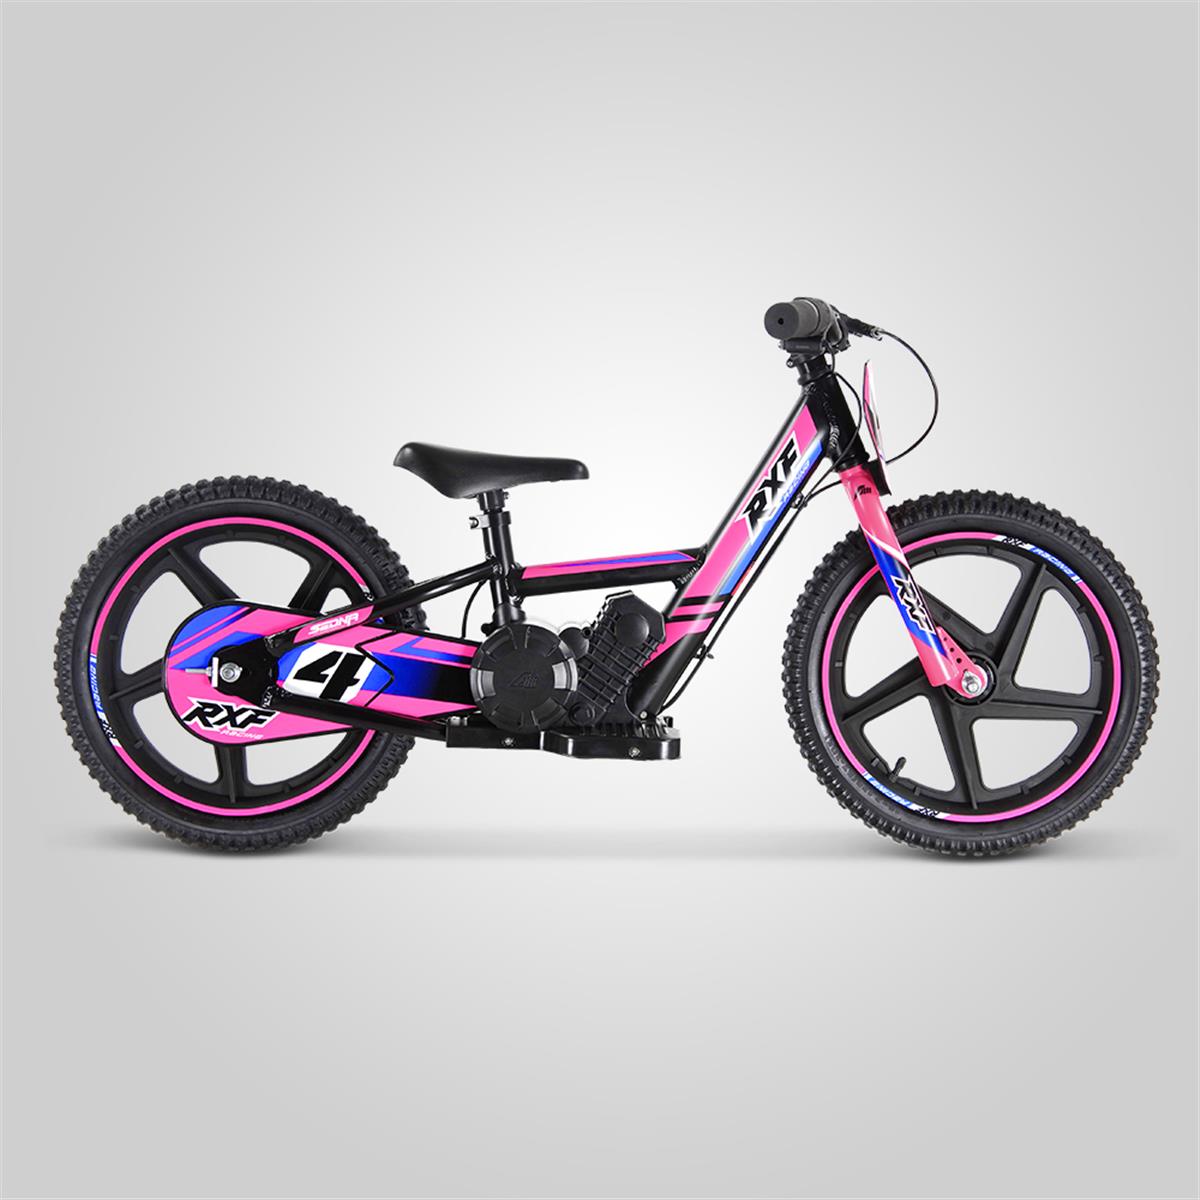 Pocket quad enfant smx vx 49cc 2024  Smallmx - Dirt bike, Pit bike, Quads,  Minimoto